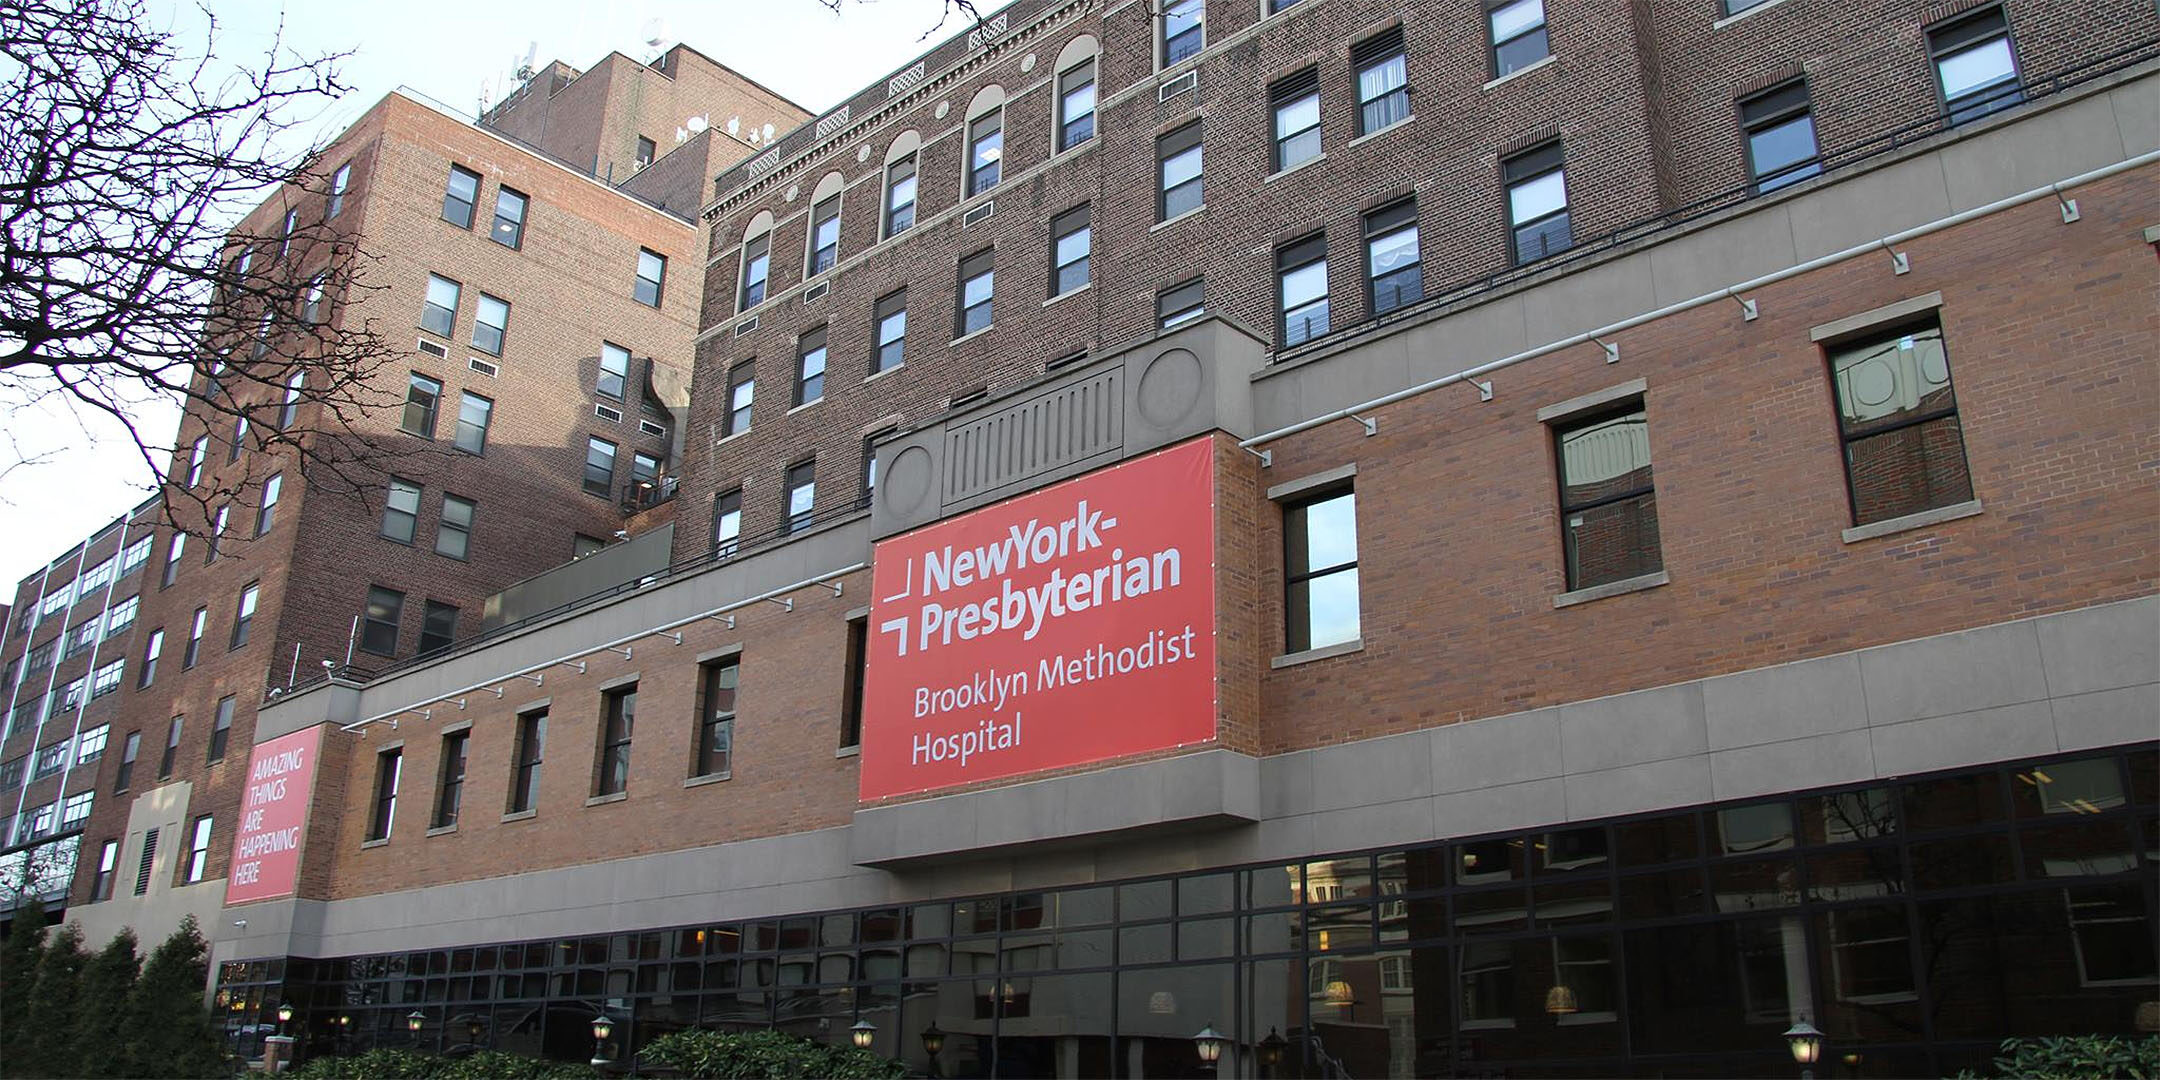 ewYork-Presbyterian Brooklyn Methodist Hospital. (courtesy of the hospital)